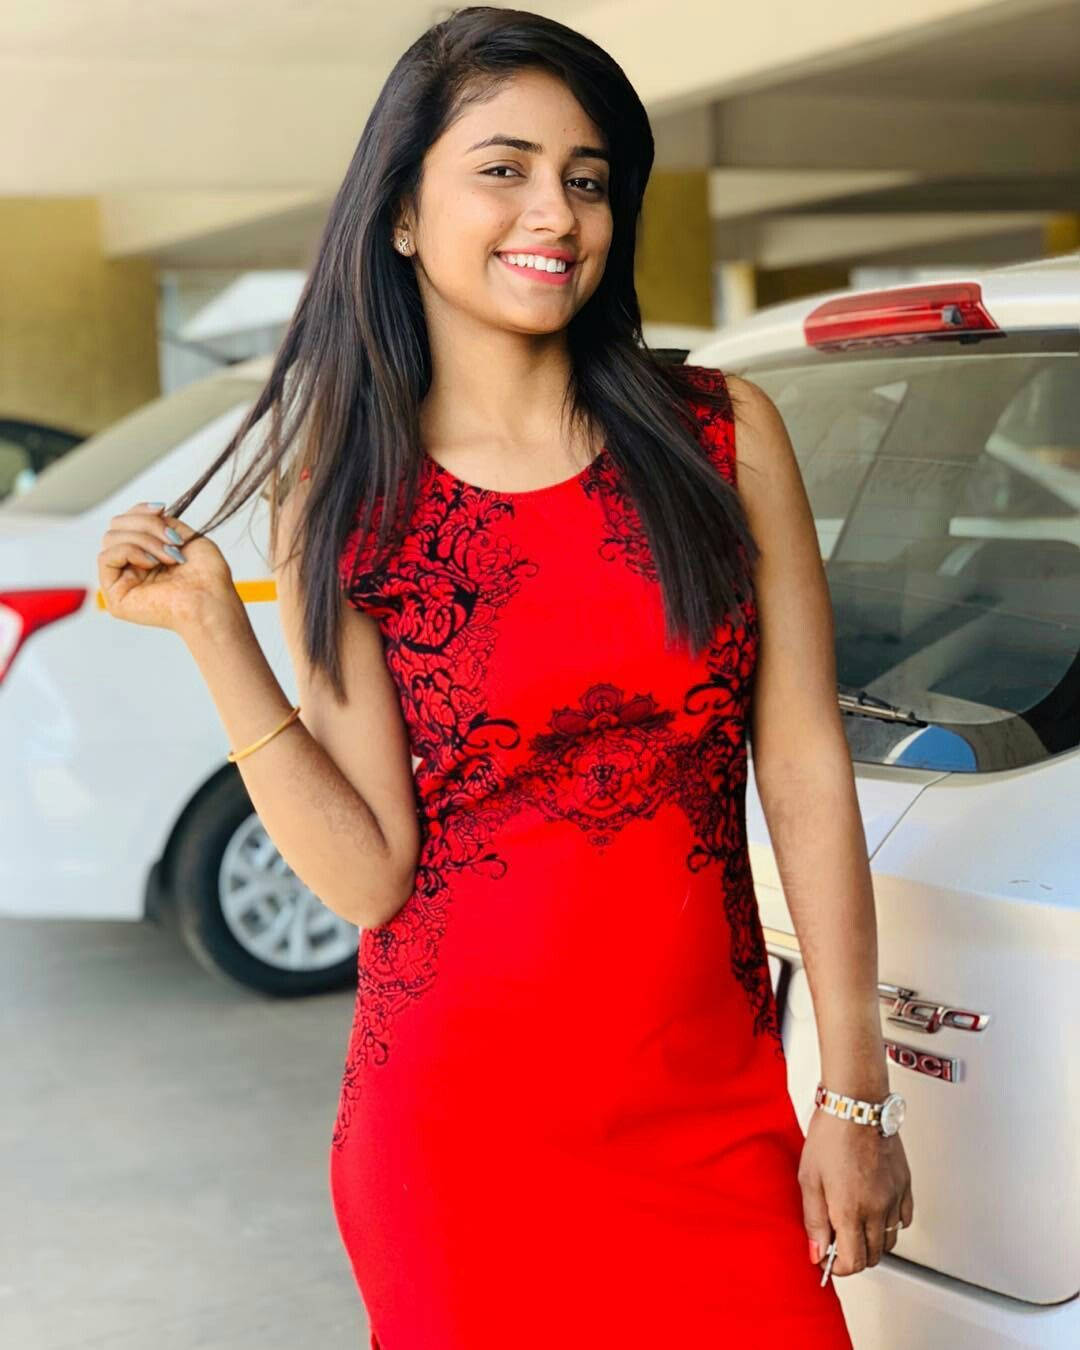 Nisha Guragain Wearing A Red Dress Wallpaper